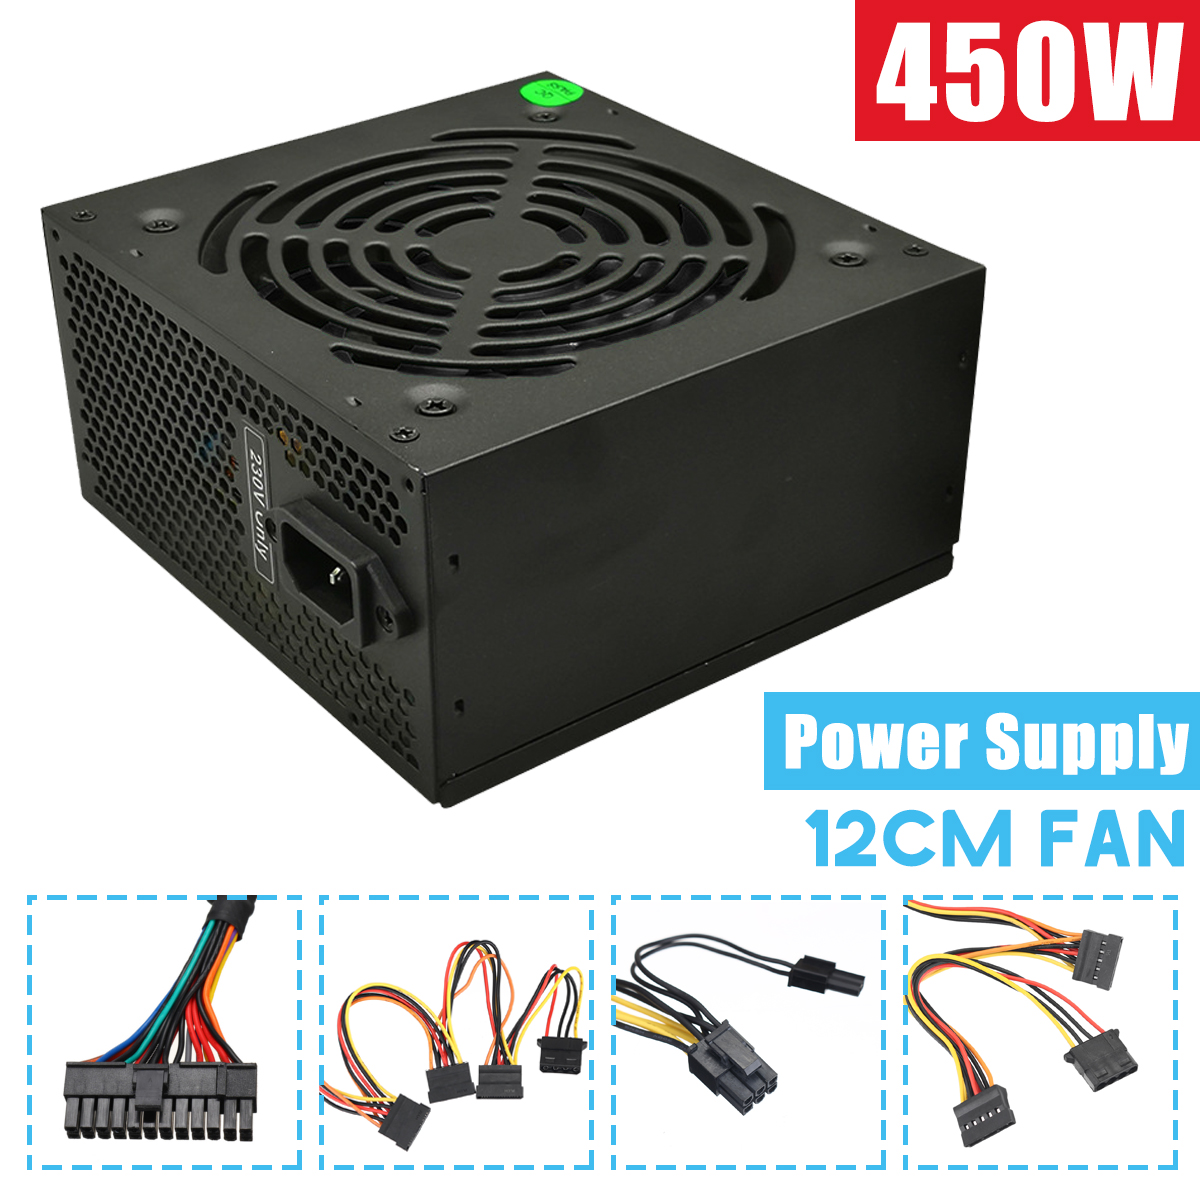 450W-Power-Supply-12cm-Fan-8-Pin-PCI-SATA-12V-Computer-Power-Supply-1664872-2